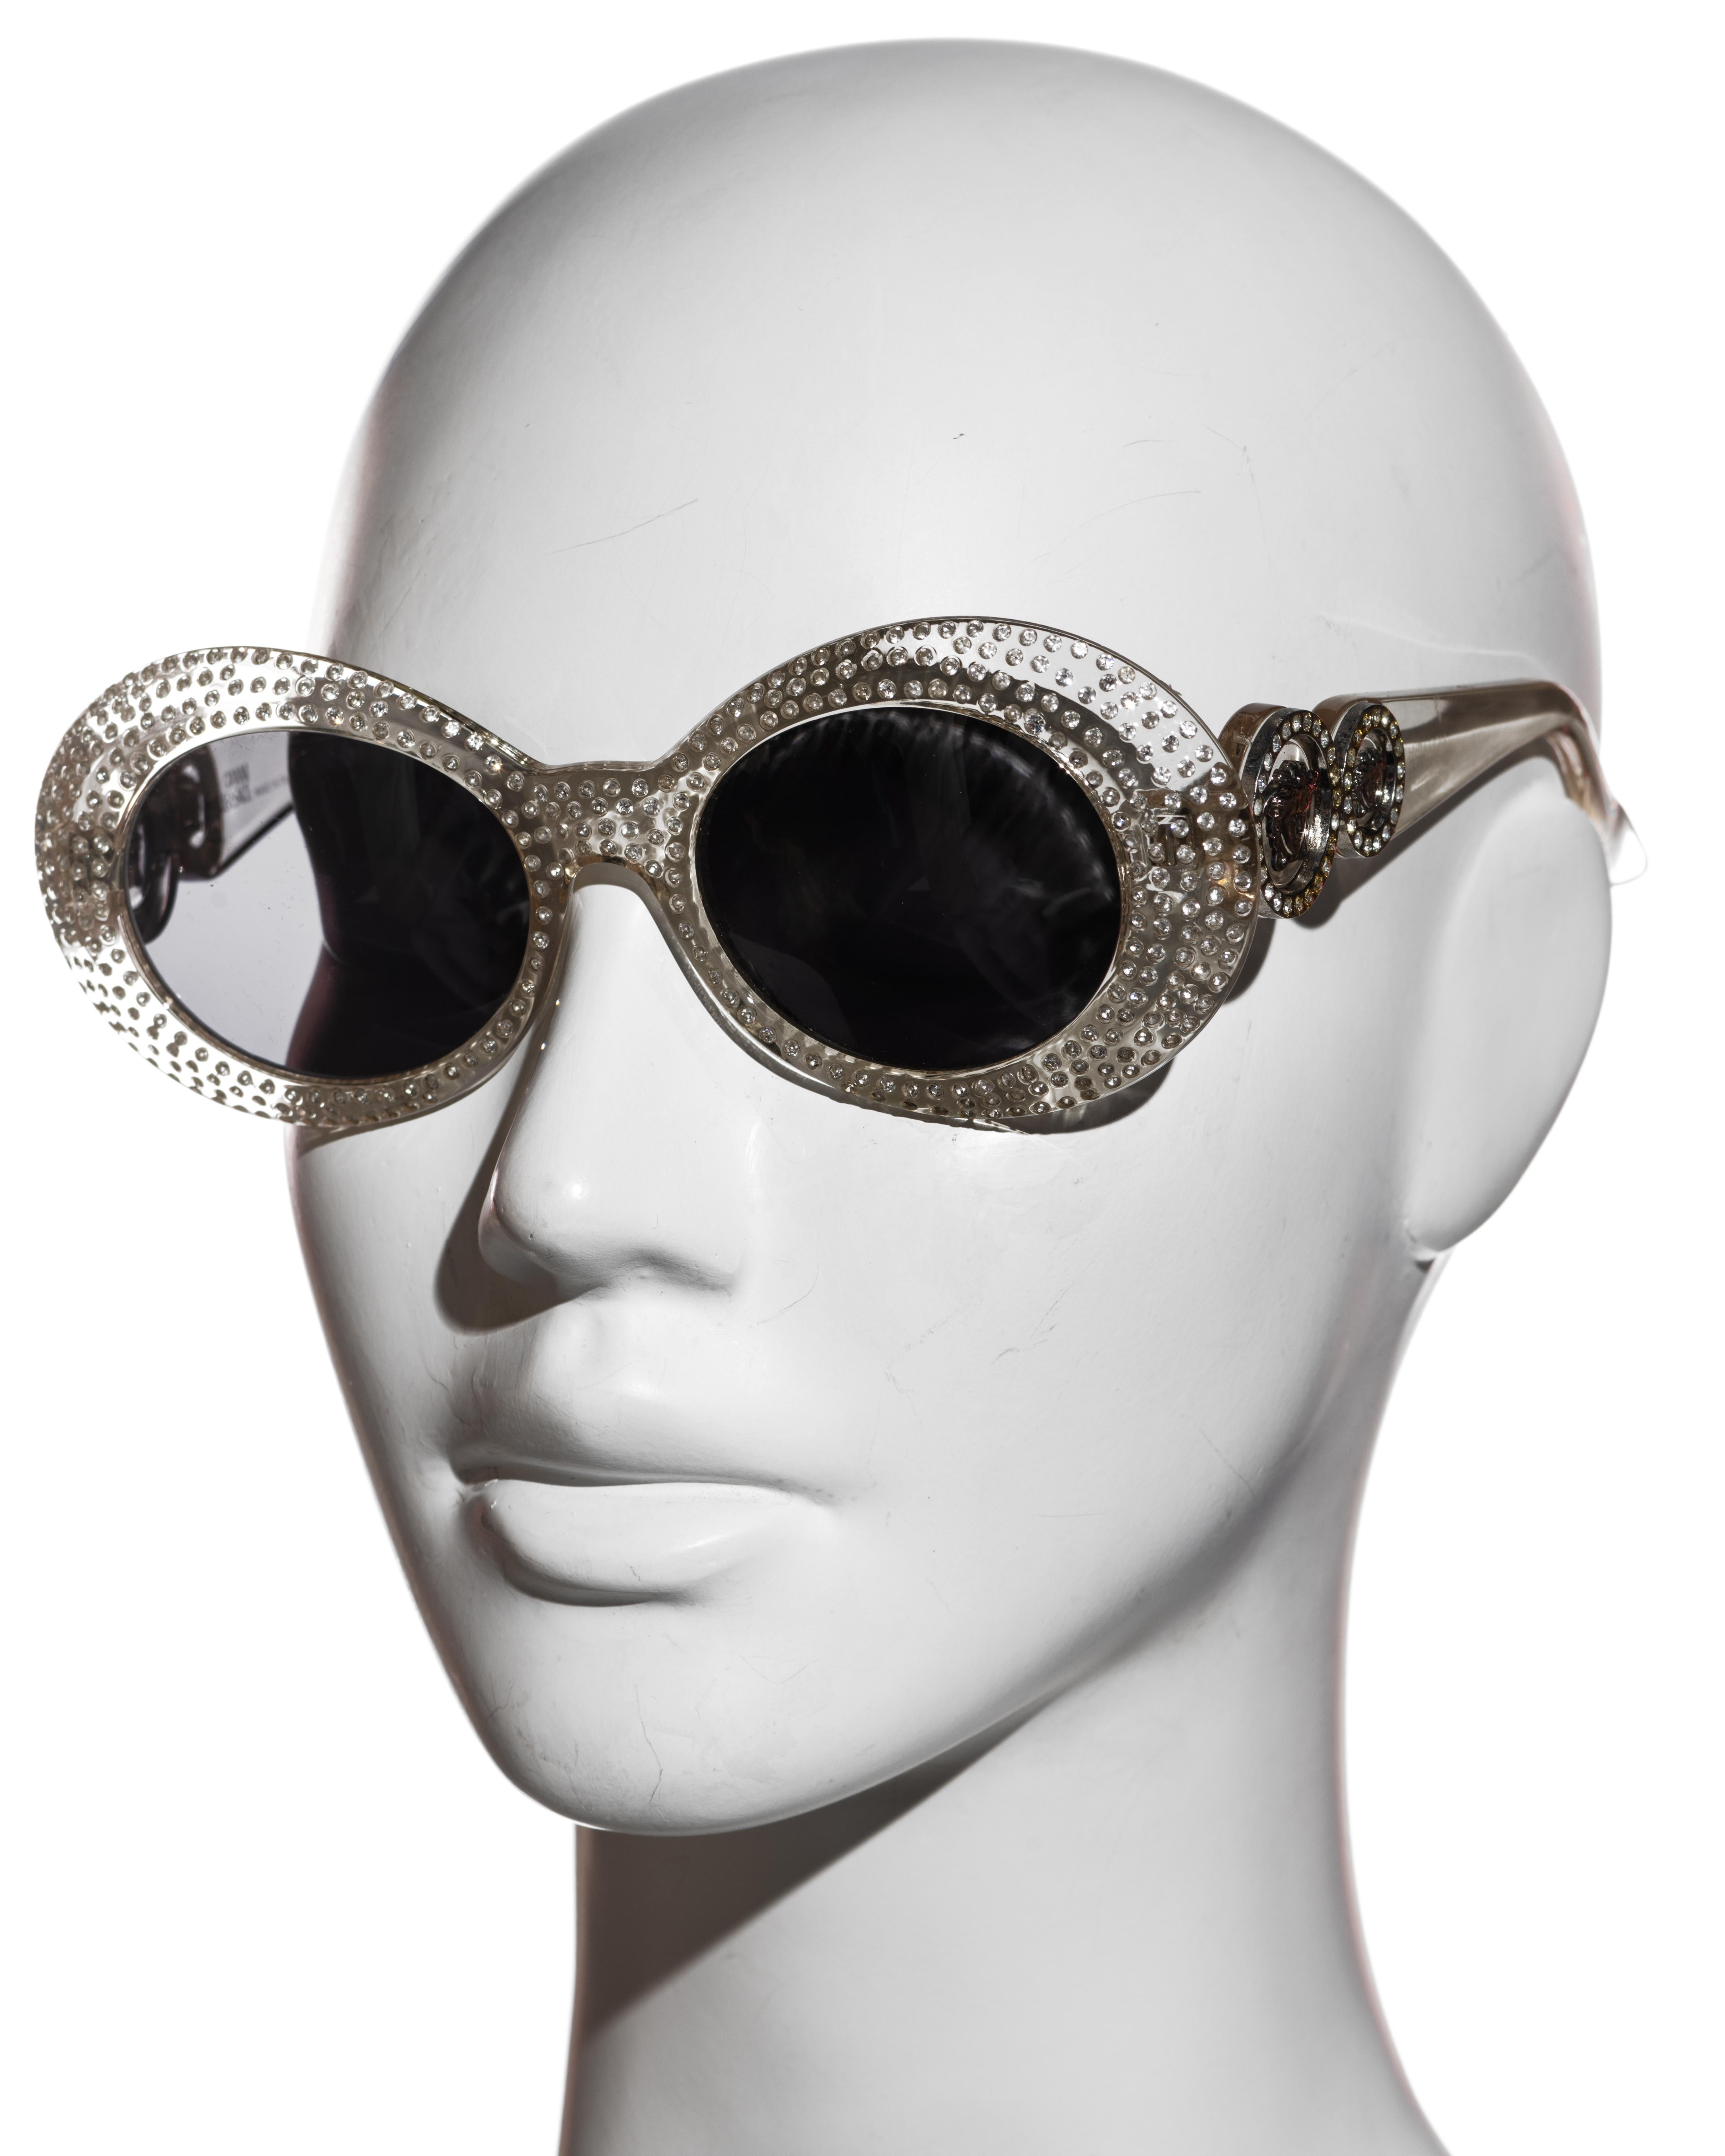 ▪ Gianni Versace unisex clear frame rhinestone sunglasses 
▪ Large round frames
▪ Dark lenses 
▪ Silver rhinestone Medusa detail on the temples 
▪ Fall-Winter 1996